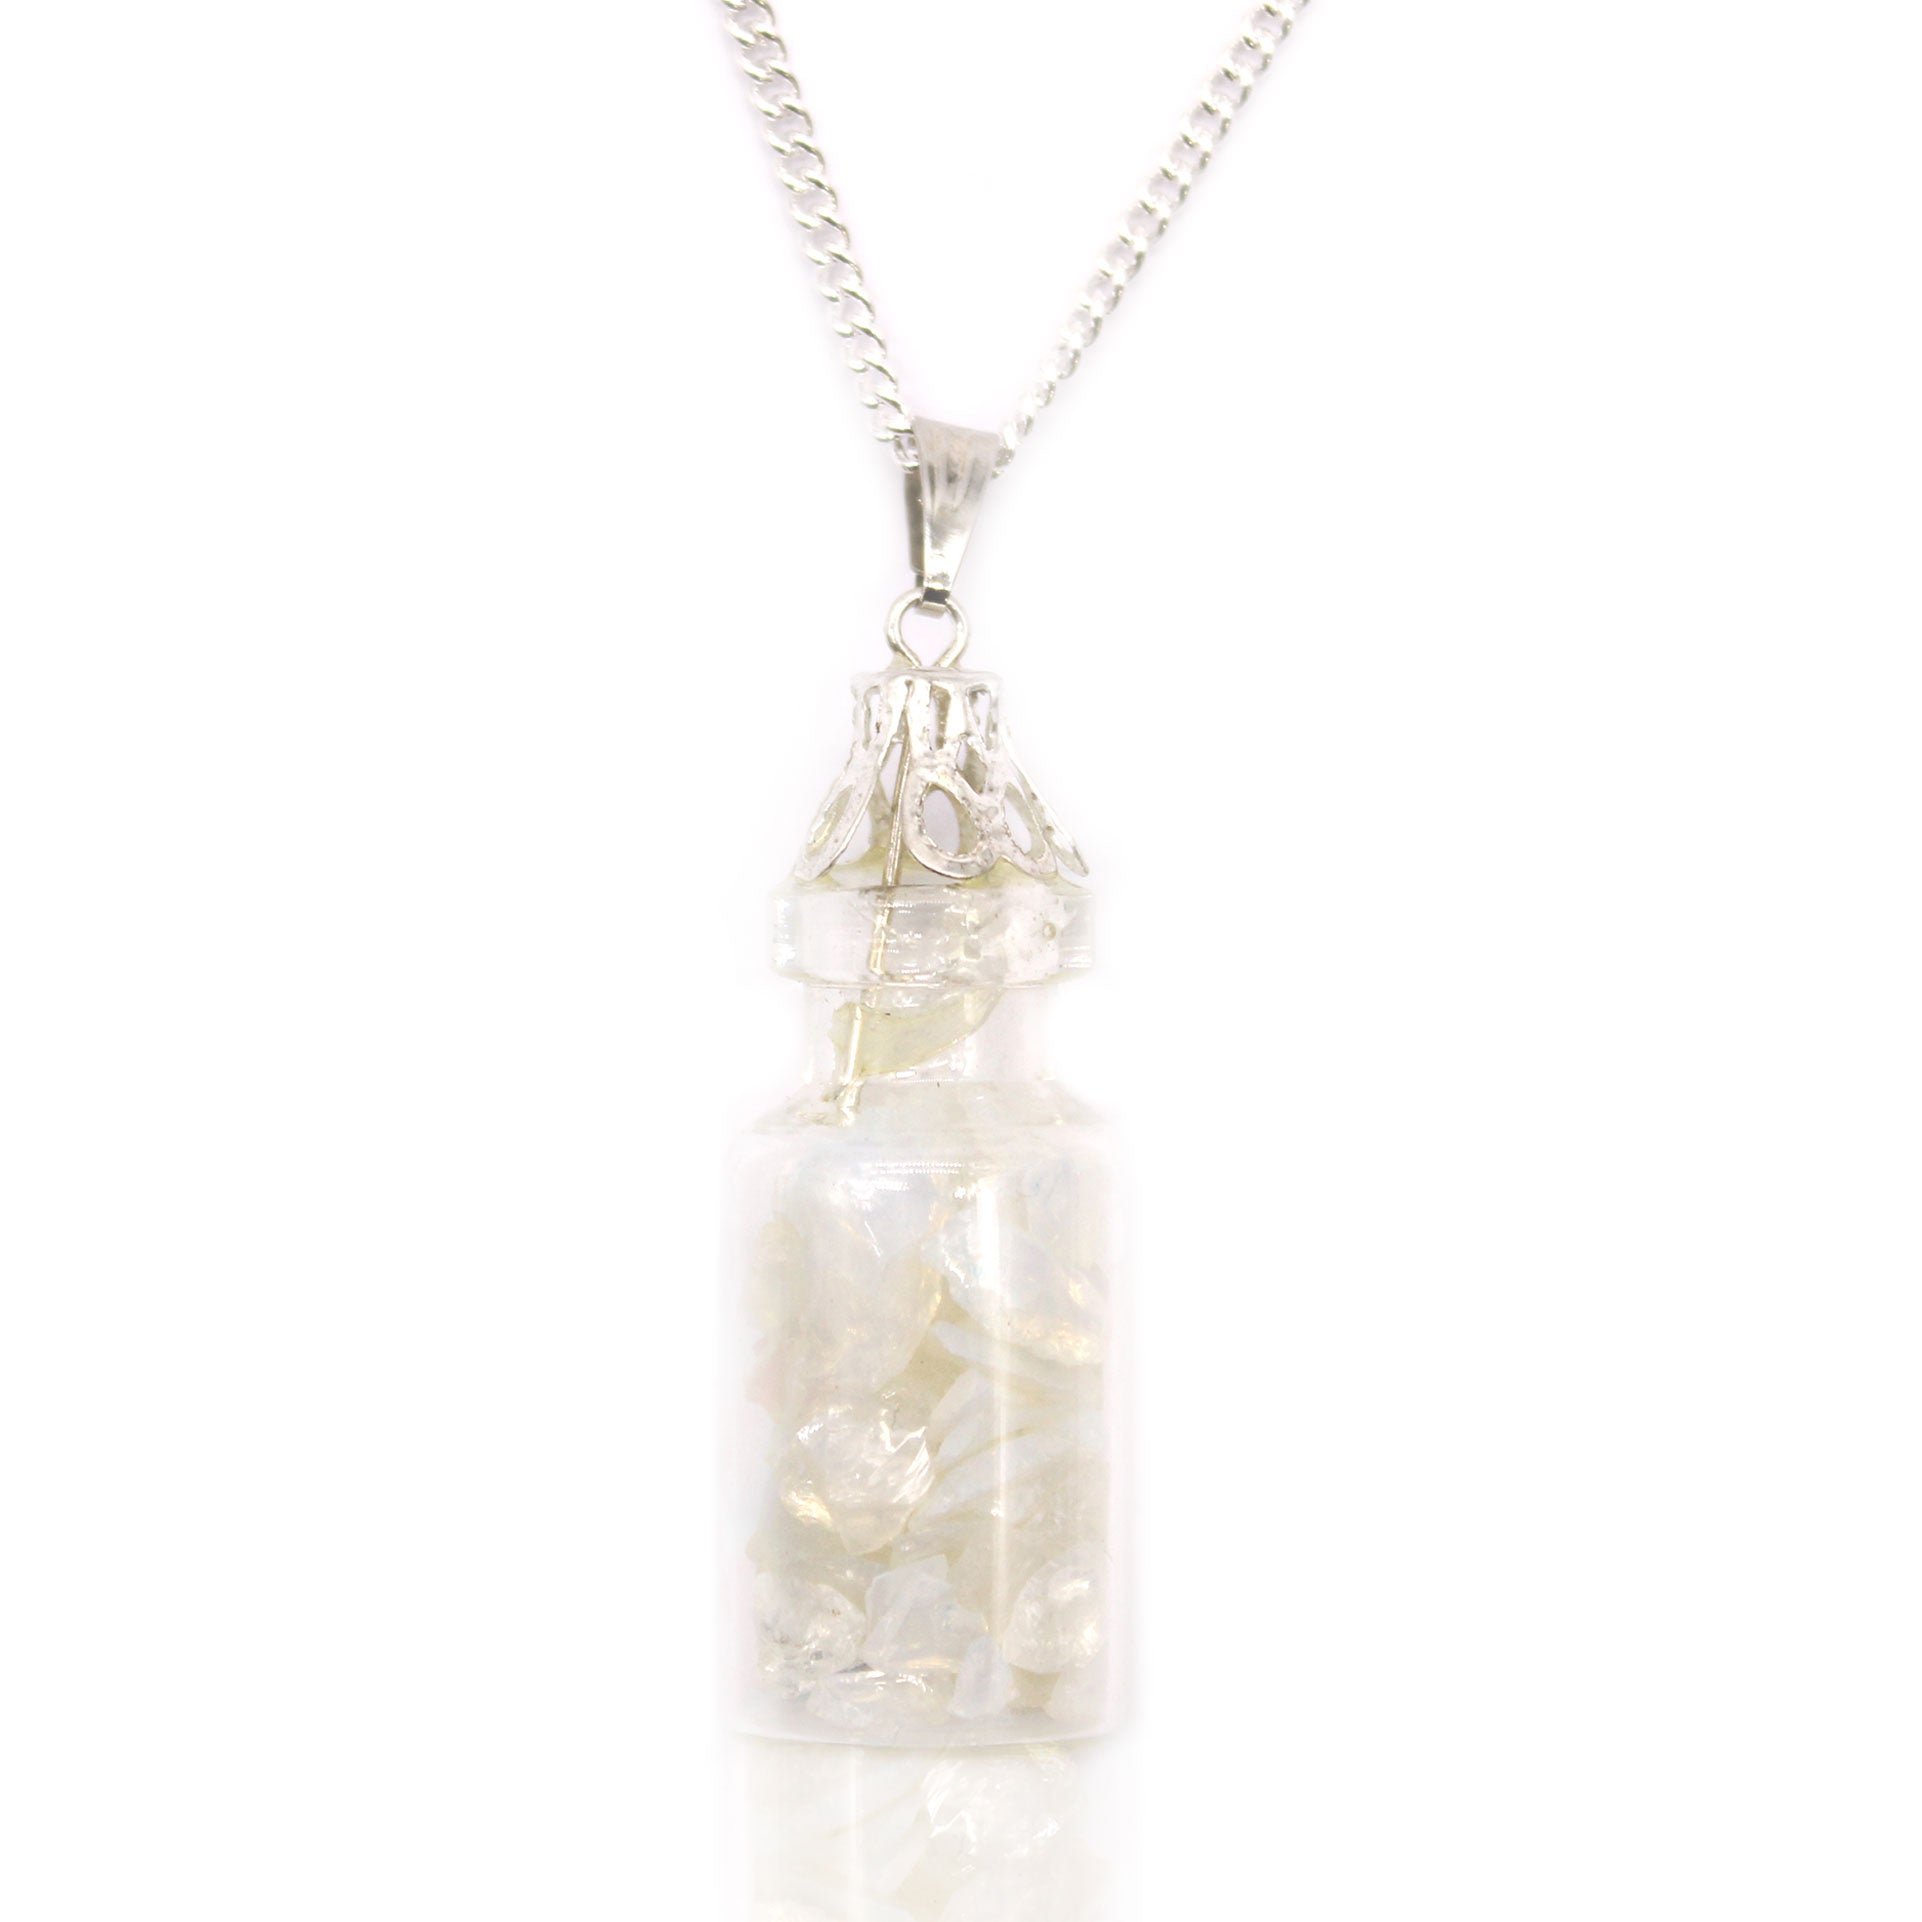 View Bottled Gemstones Necklace Opalite information